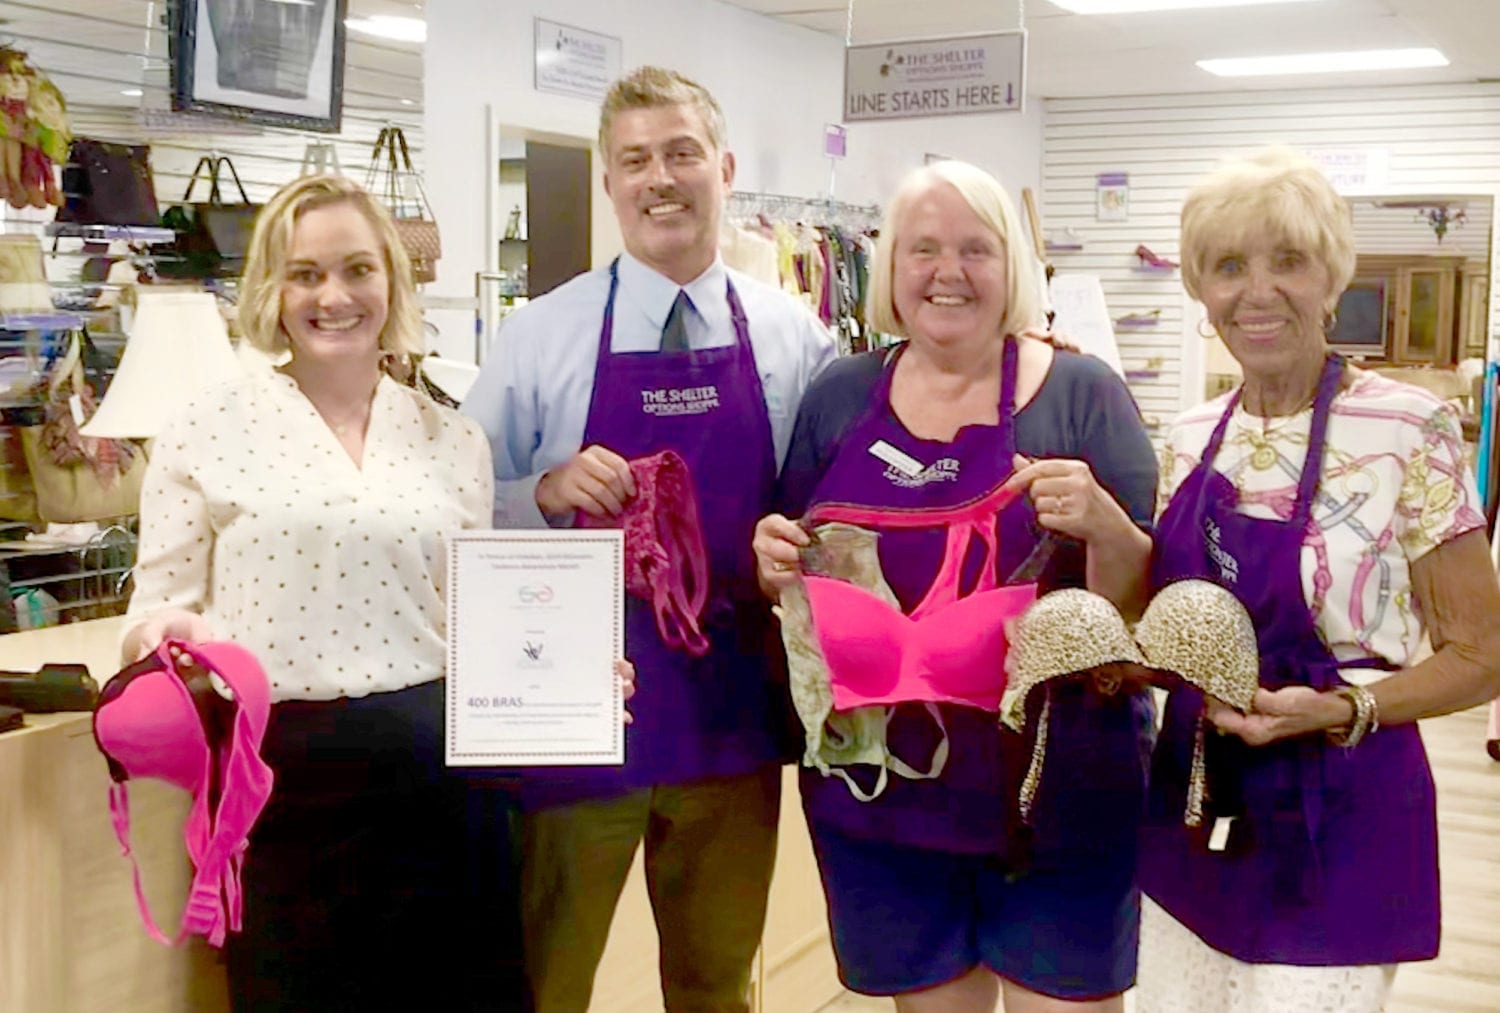 Area ISTG chapter donates bras for Shelter survivors - The Shelter